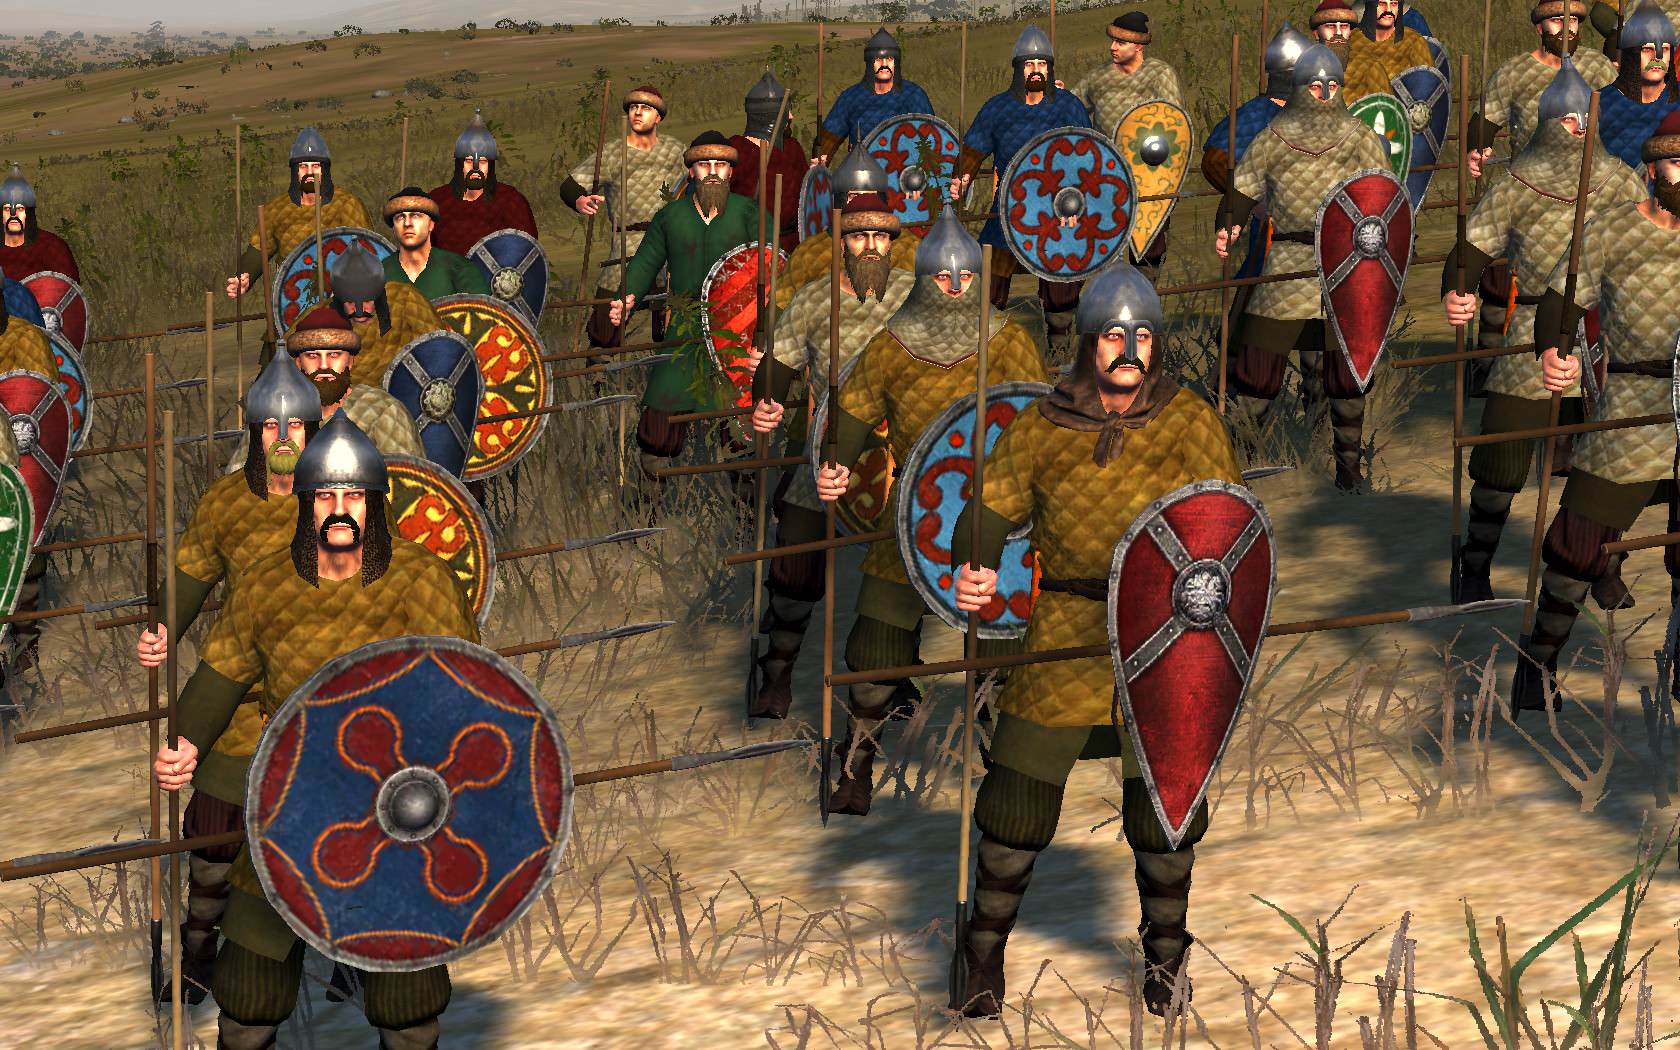 Total war medieval kingdoms 1212 ad